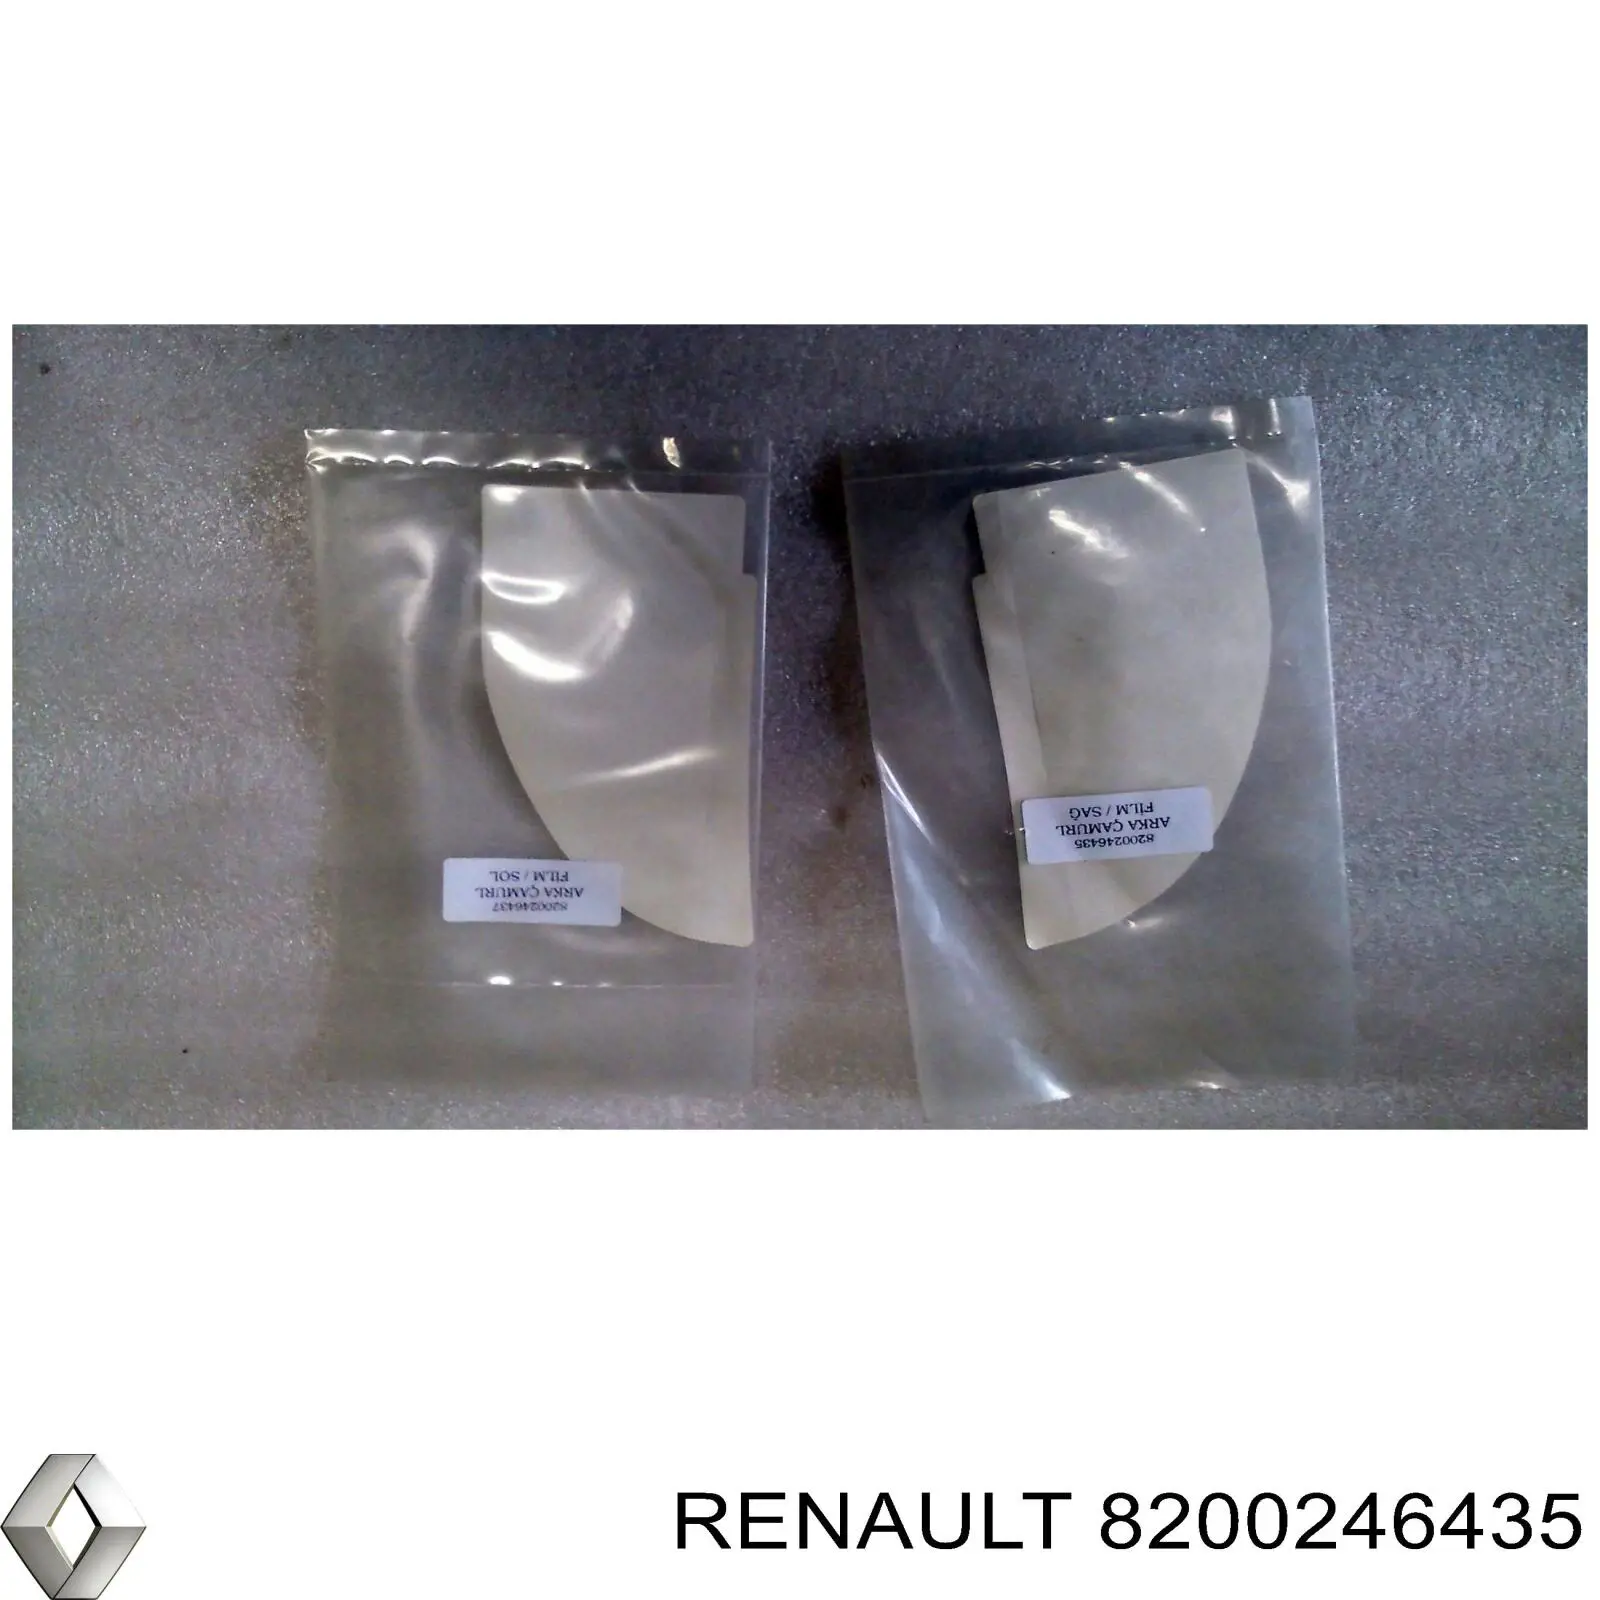 8200246435 Renault (RVI) pegatina para guardabarro trasero